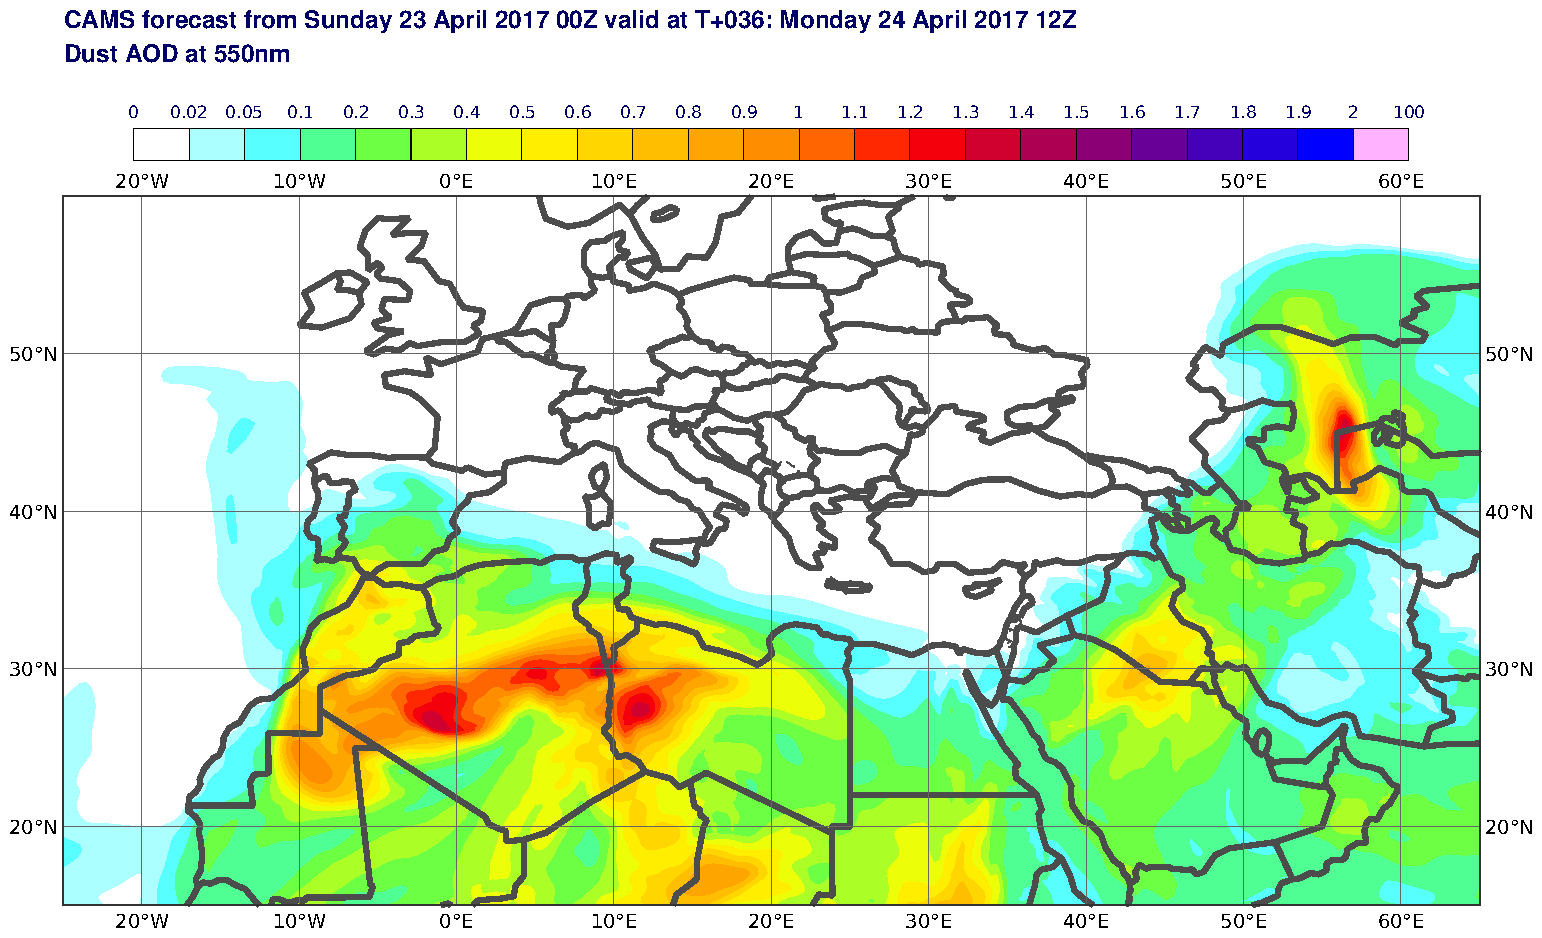 Dust AOD at 550nm valid at T36 - 2017-04-24 12:00